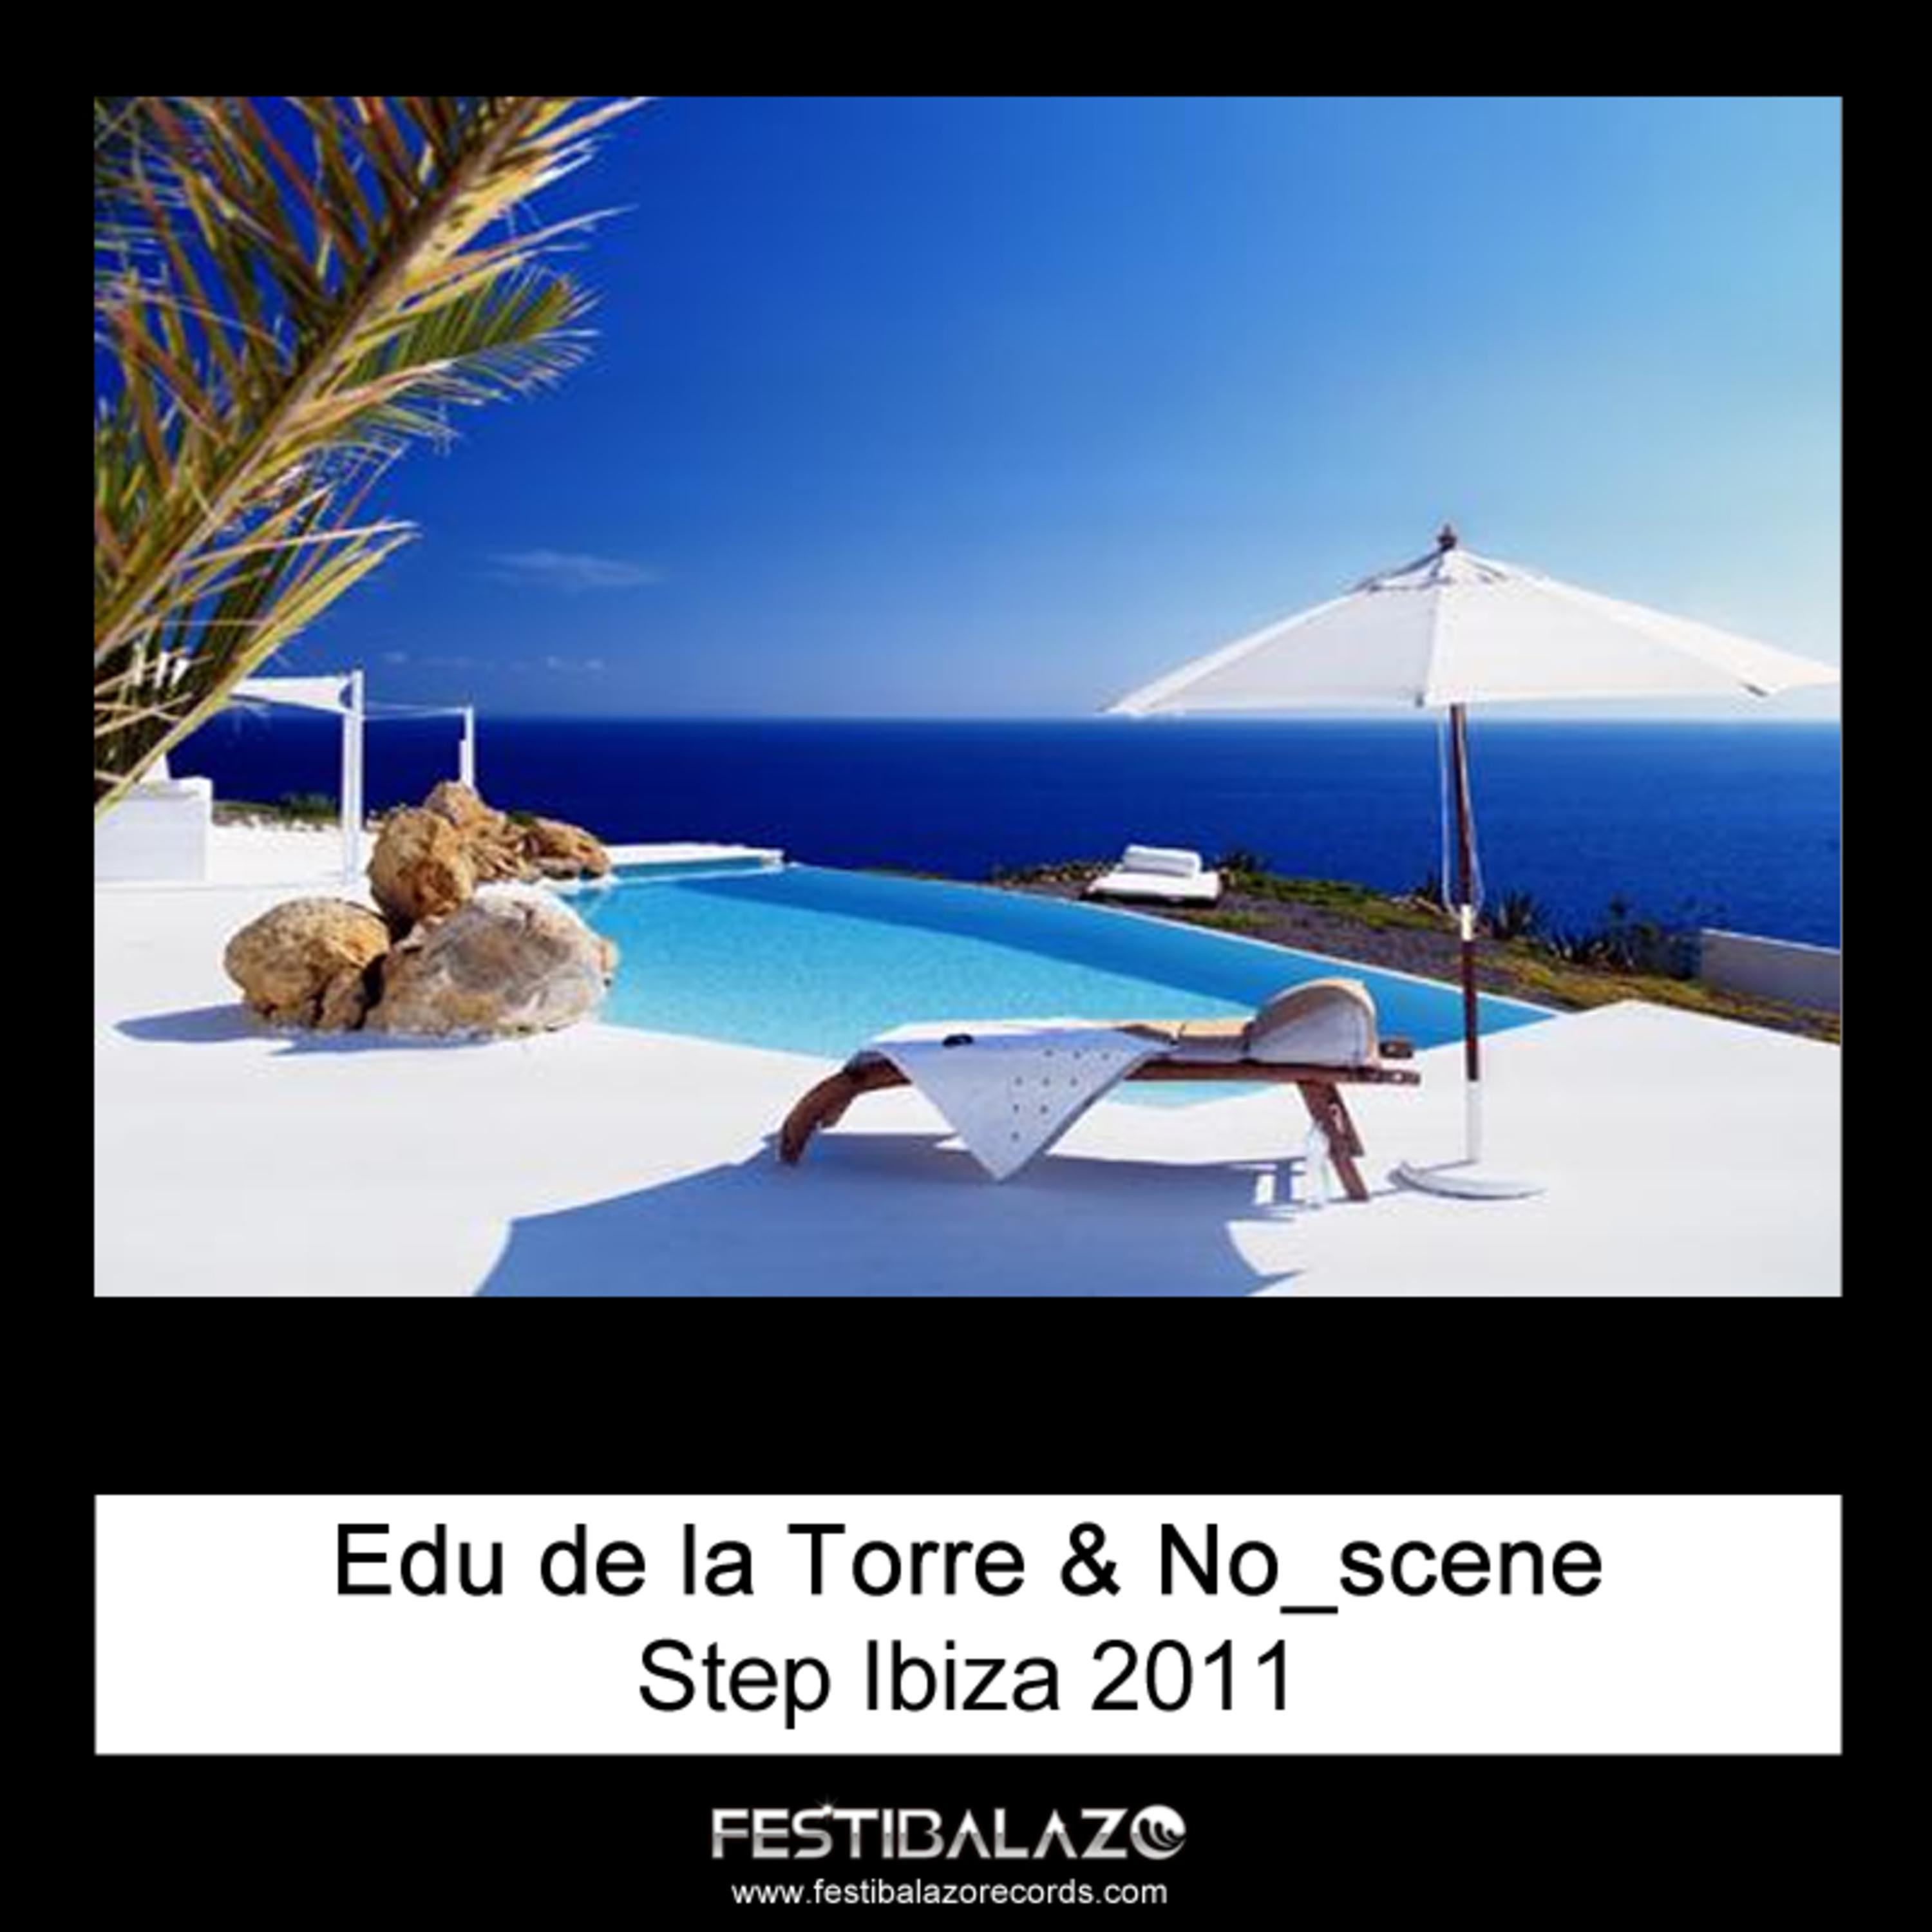 Step Ibiza 2011